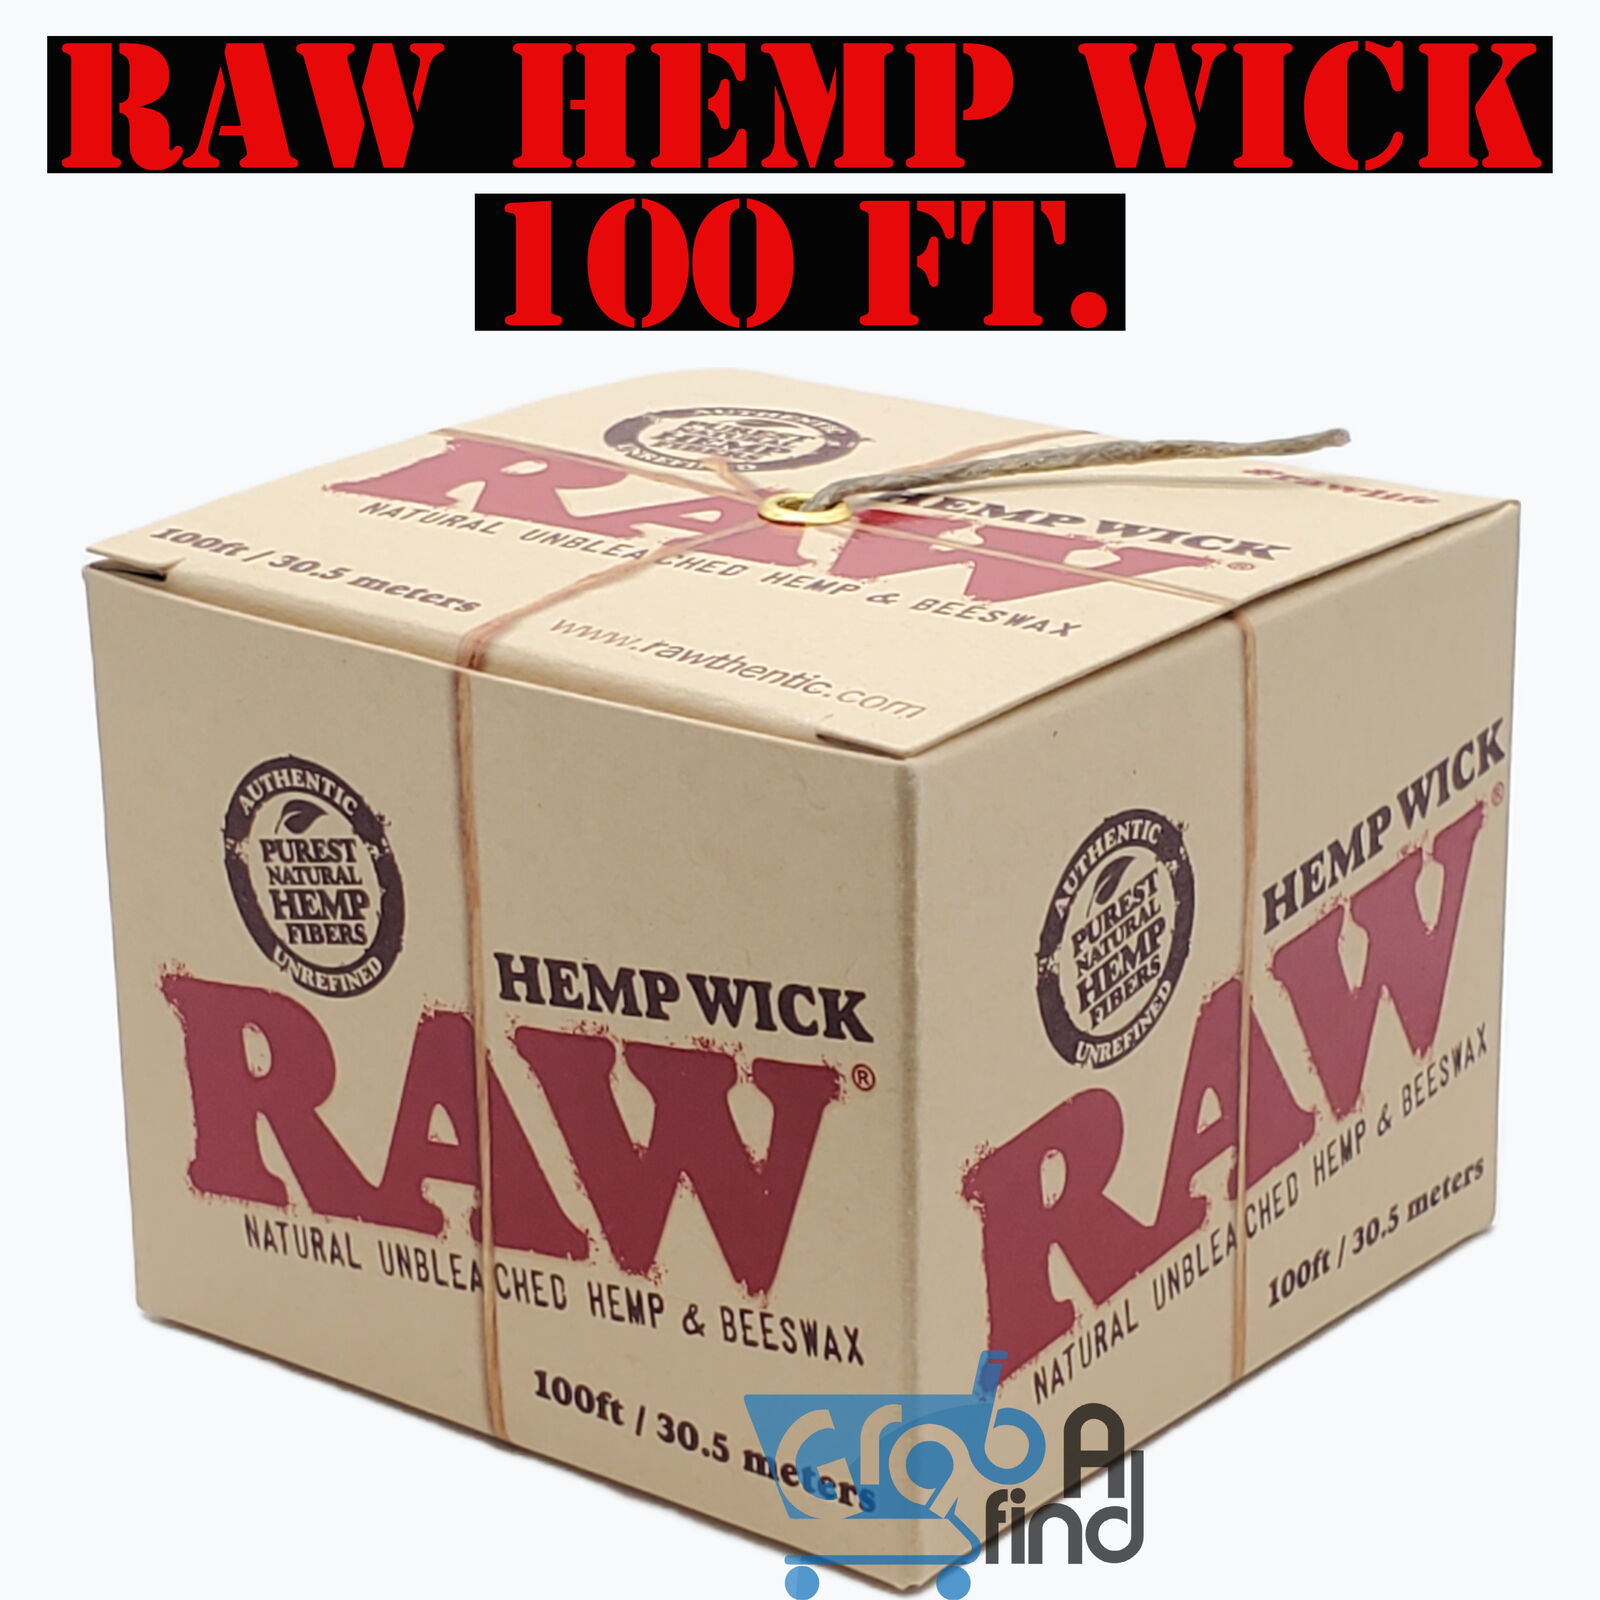 RAW Hemp Wick 100 Ft. Made of Natural Unbleached Hemp & Beeswax